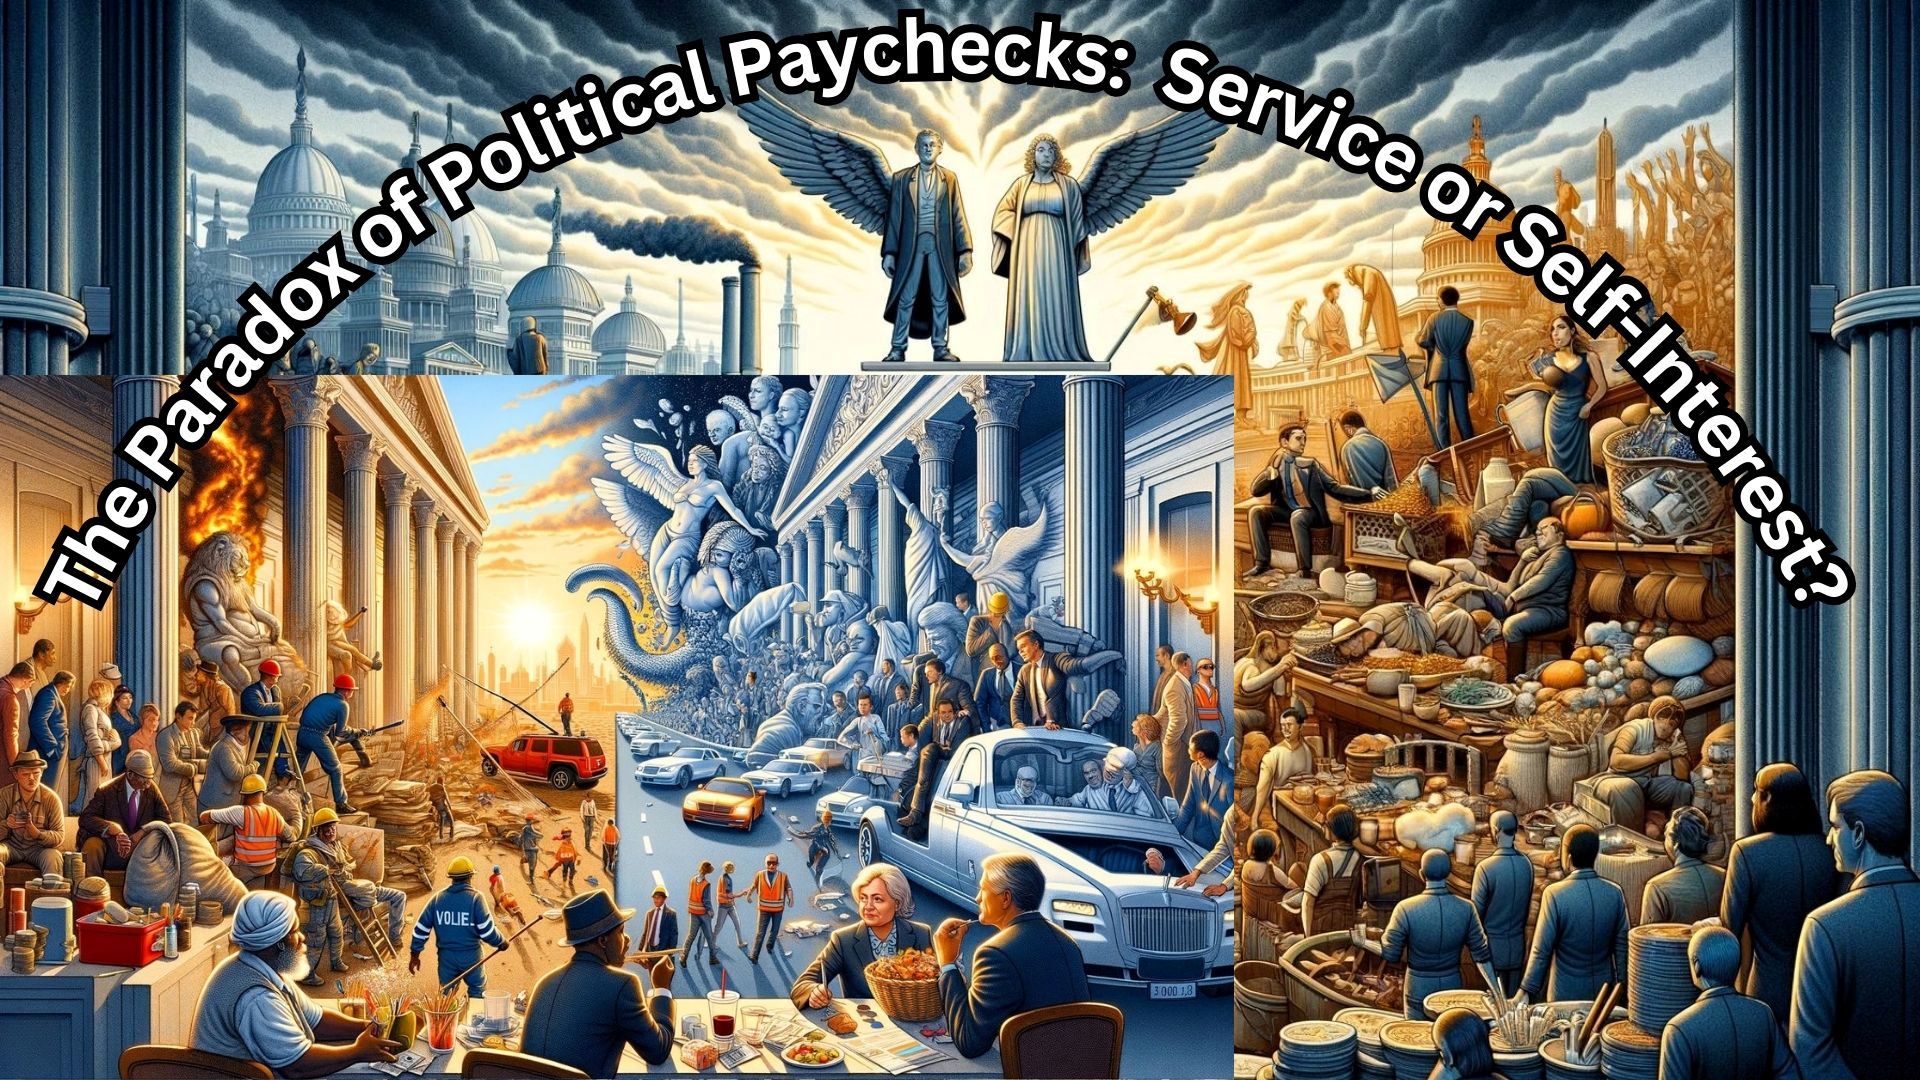 POLITICIANS' PAY